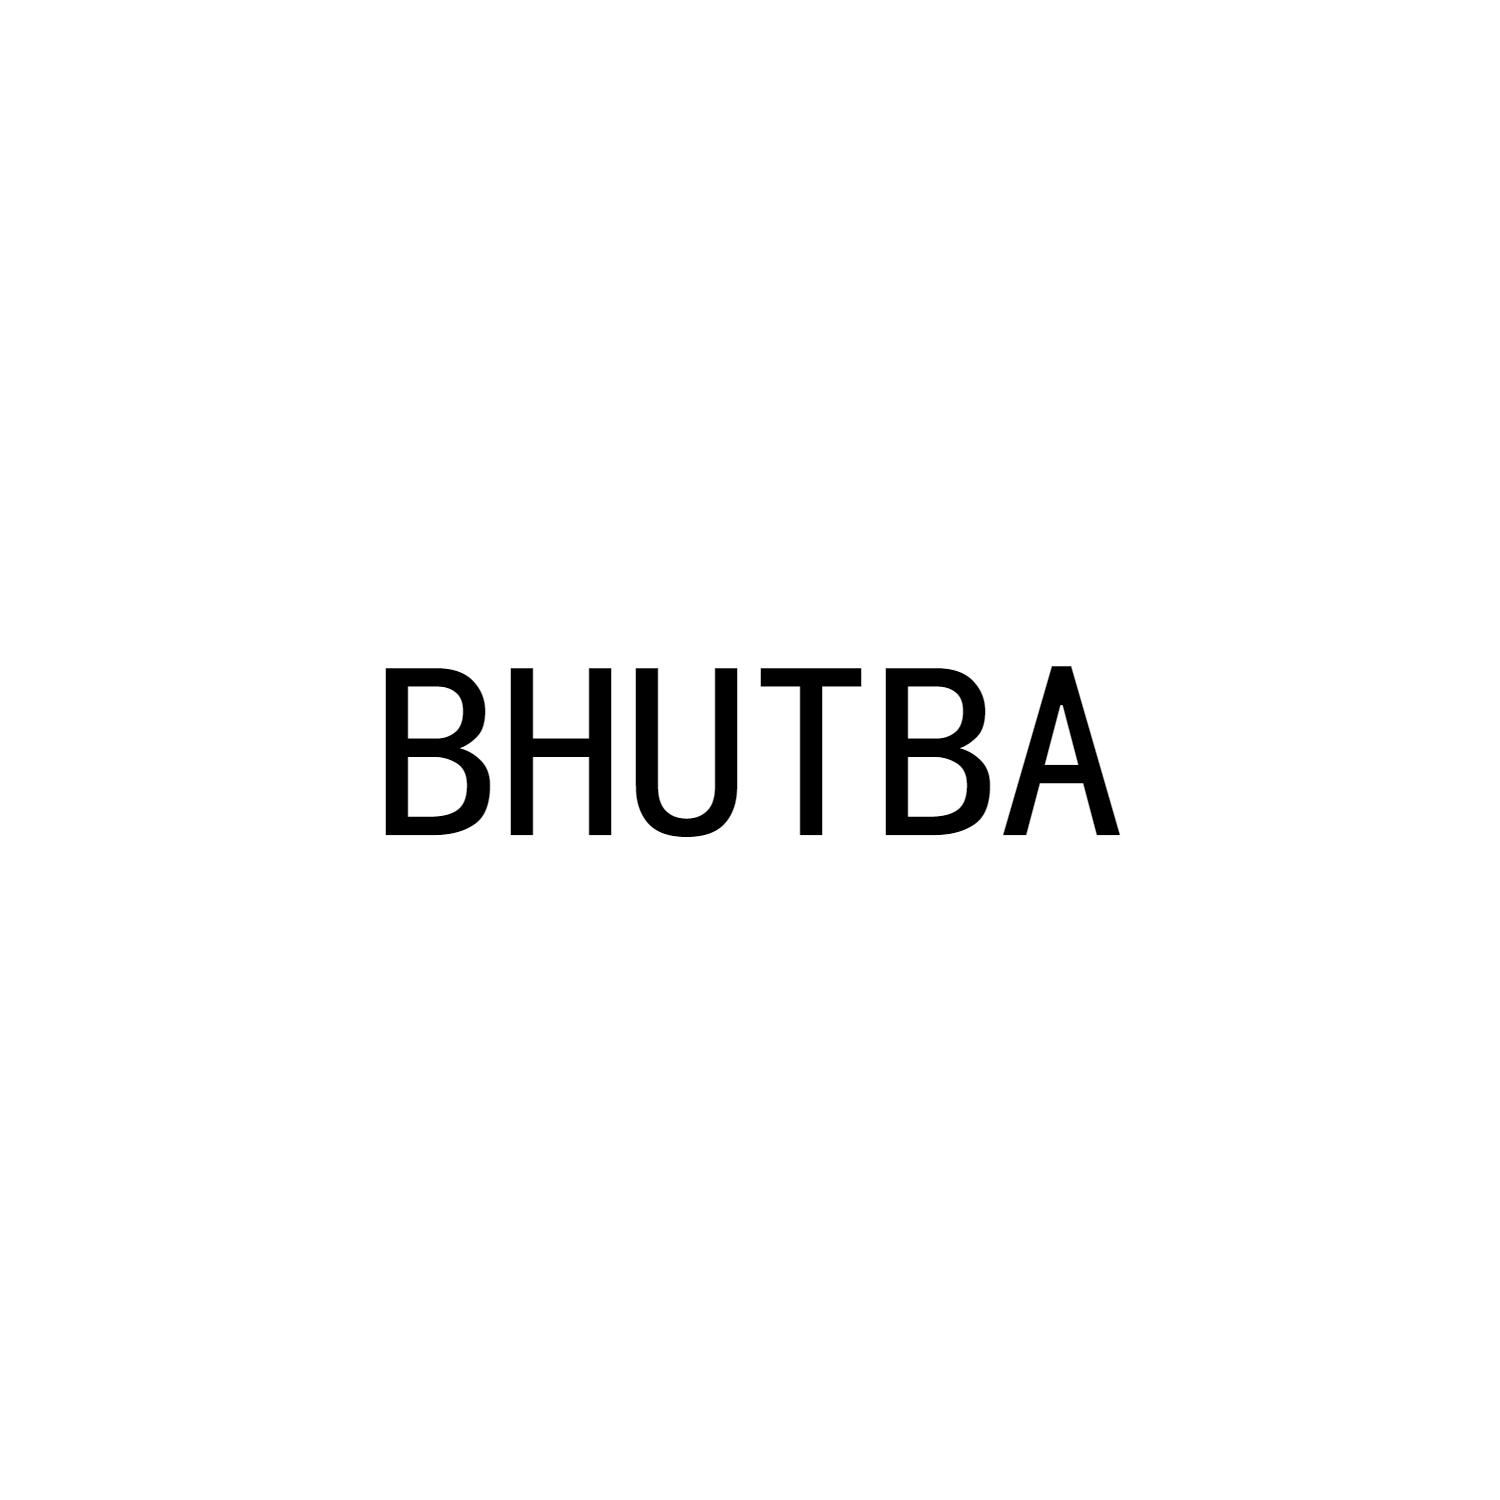 BHUTBA